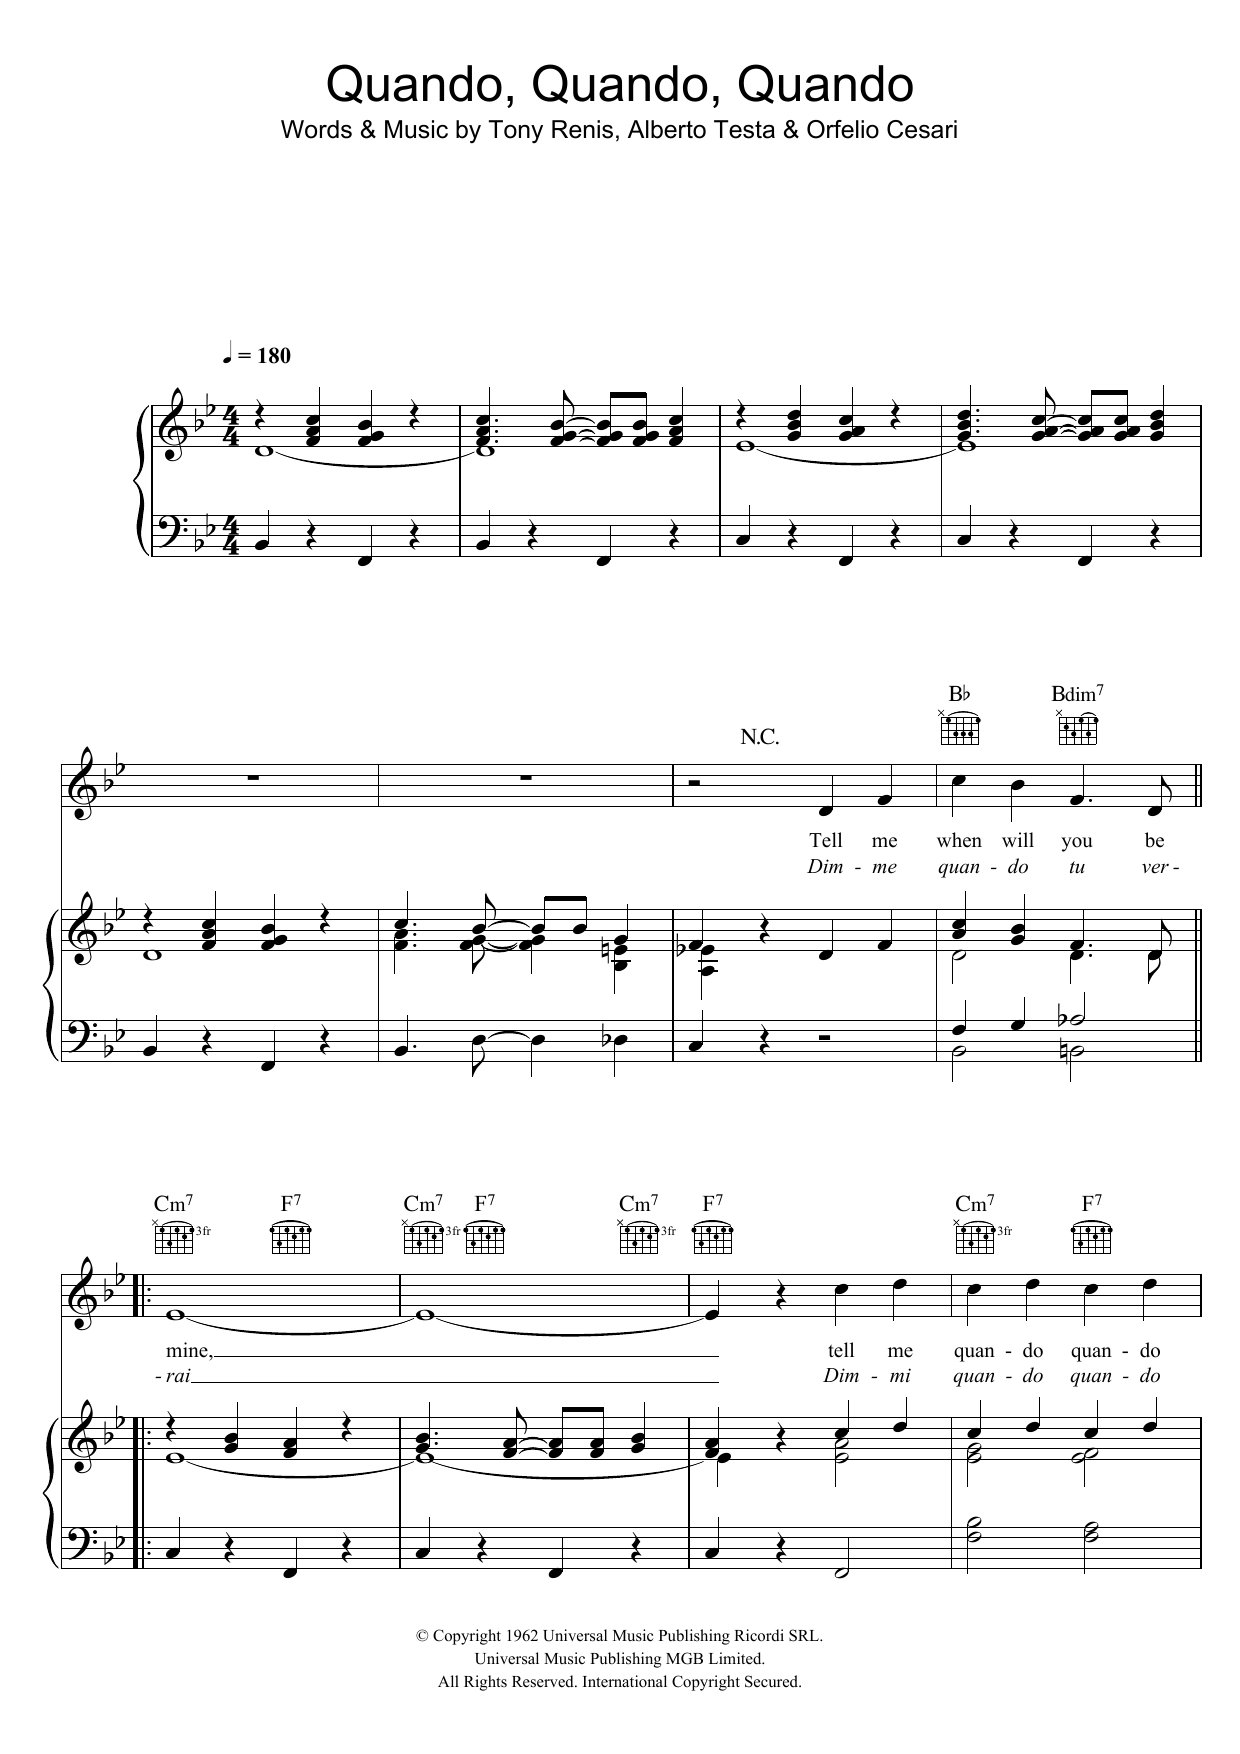 Download Engelbert Humperdinck Quando, Quando, Quando Sheet Music and learn how to play Piano, Vocal & Guitar (Right-Hand Melody) PDF digital score in minutes